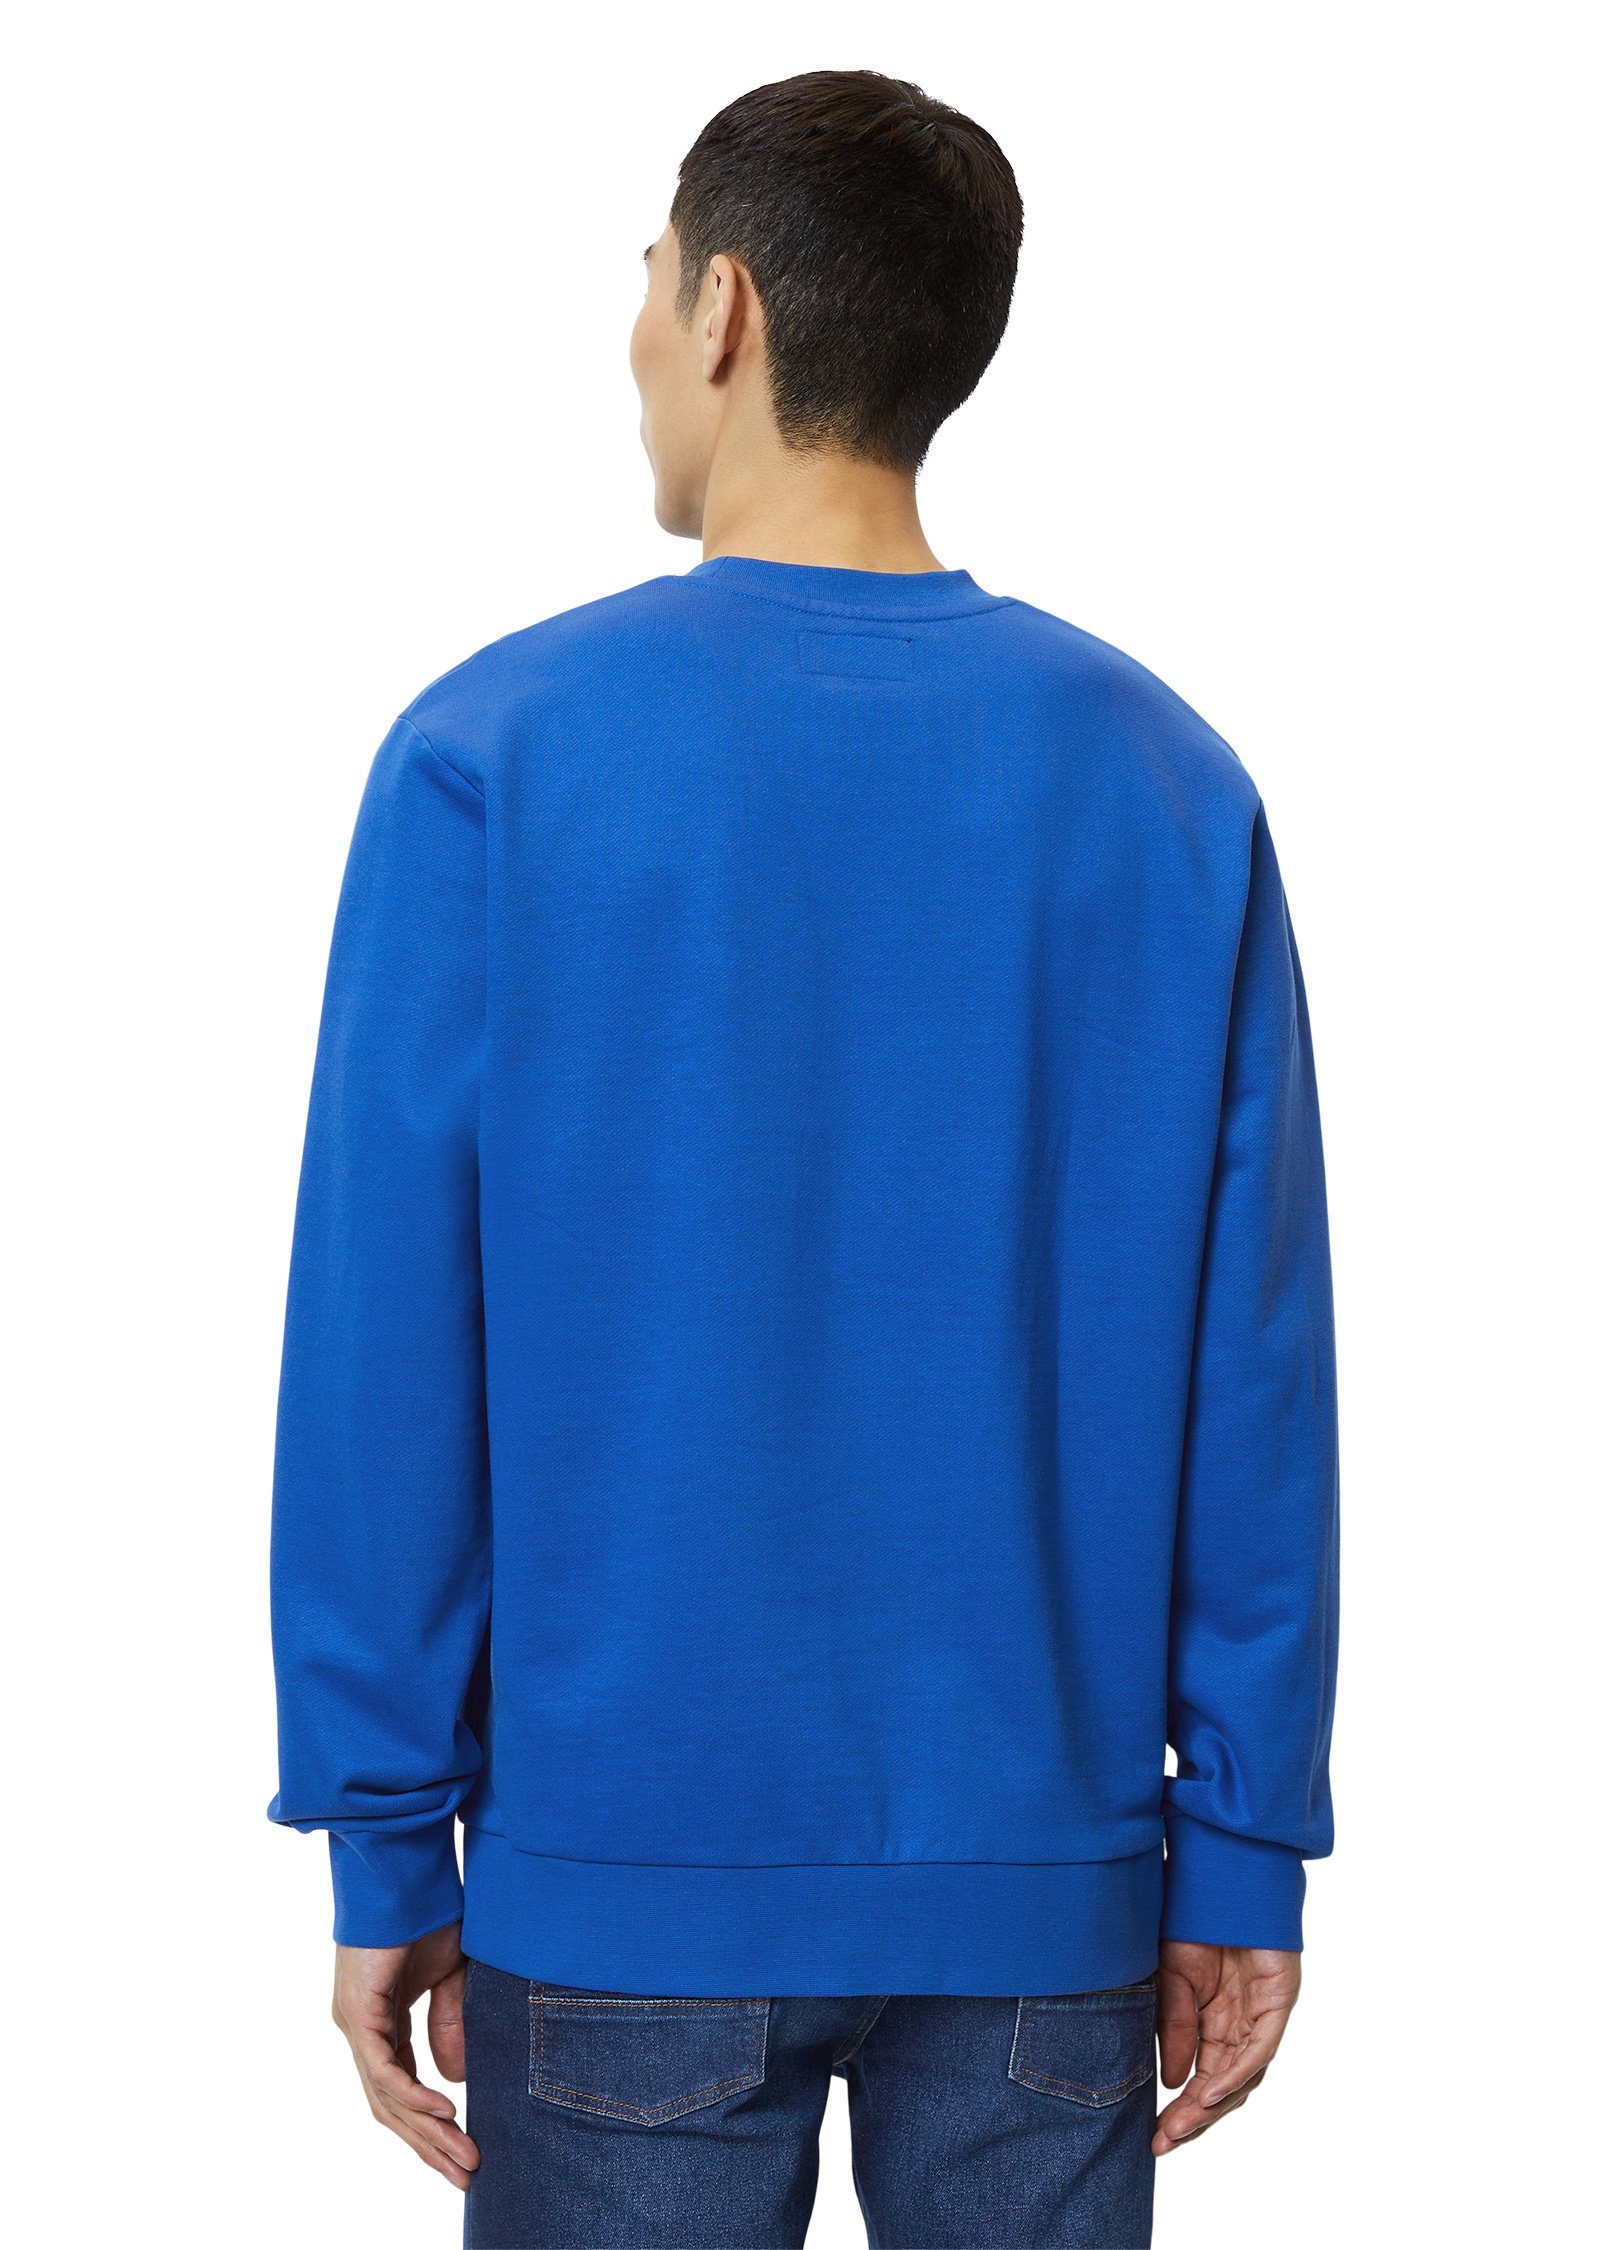 Marc O'Polo Sweatshirt aus blau Bio-Baumwolle reiner